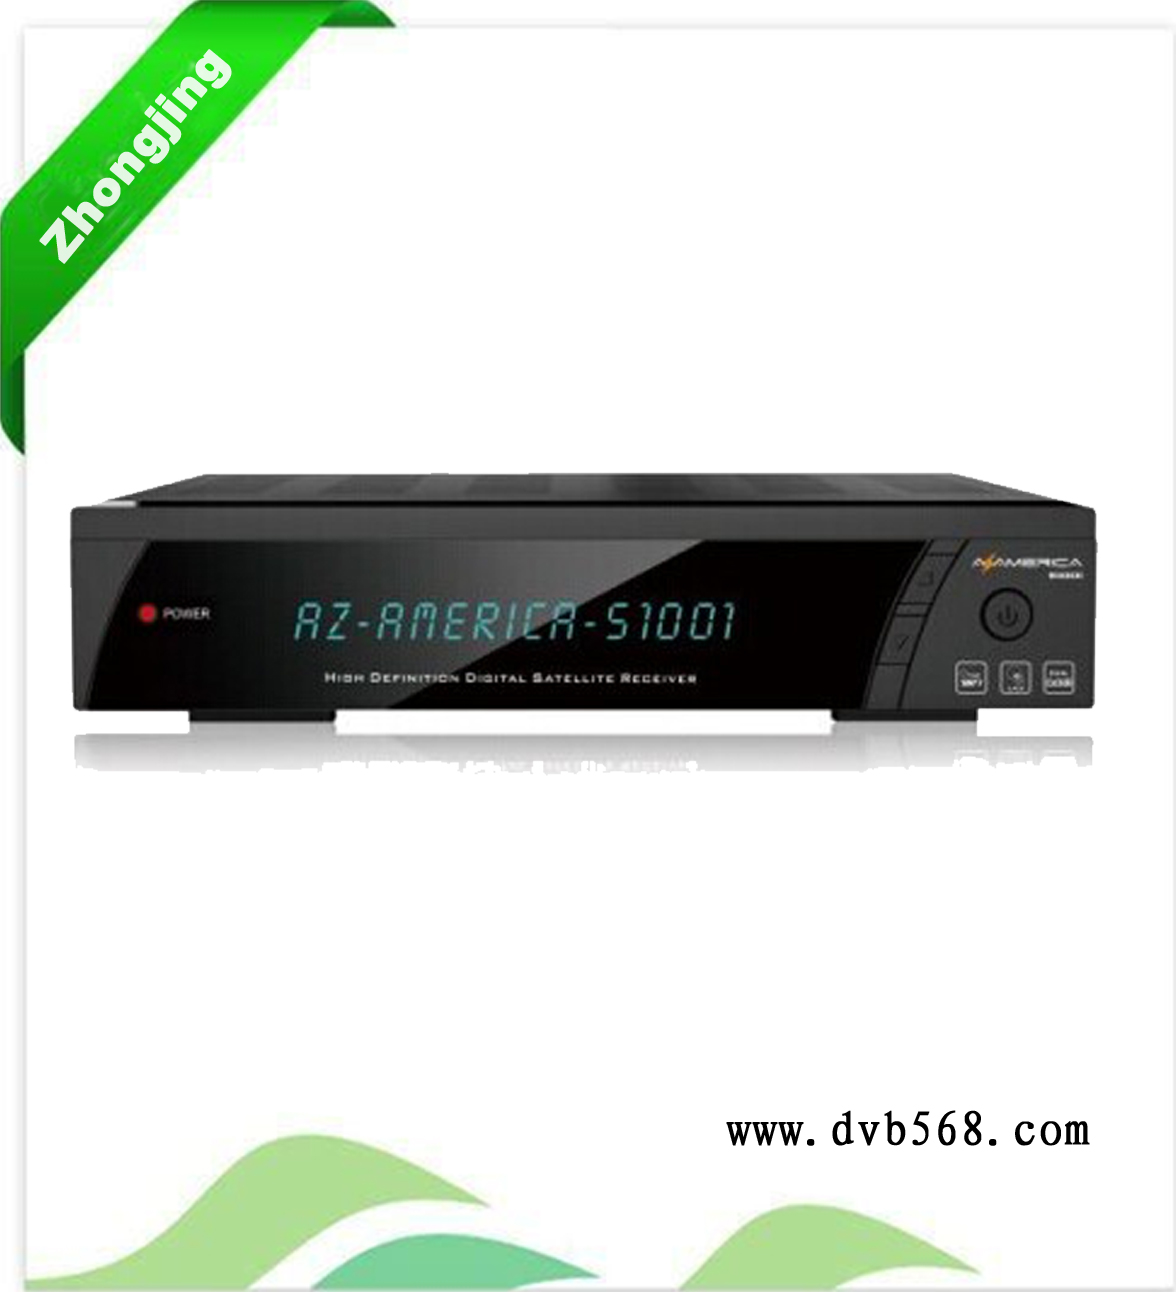 Buy Az america s1001 HD nagra3 decoder IKS free at wholesale prices